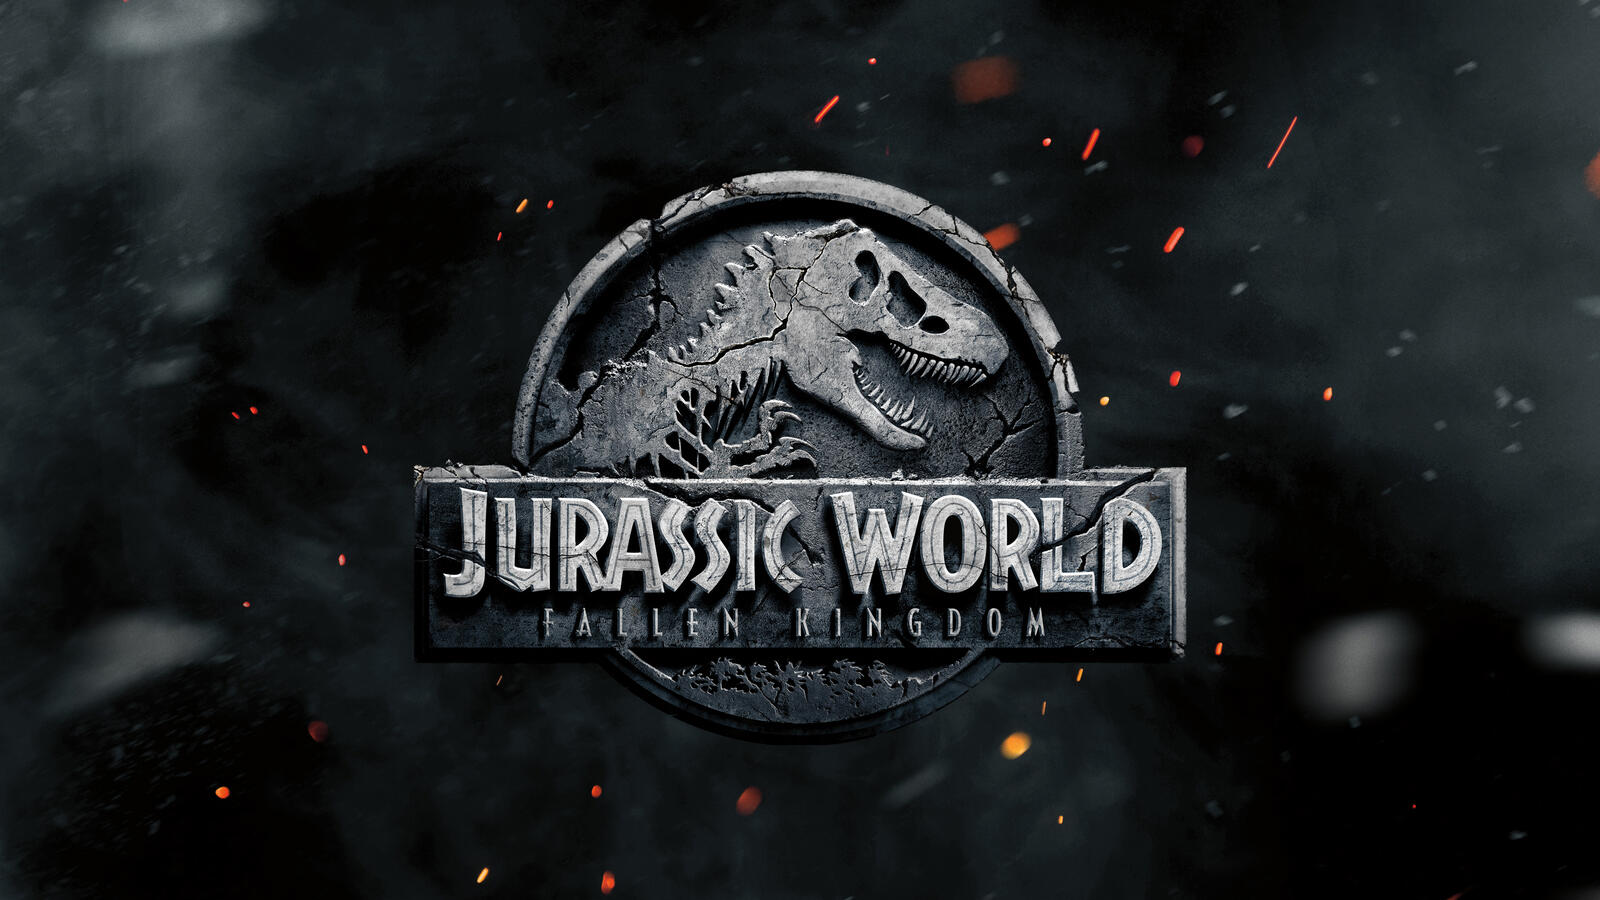 Wallpapers movies Jurassic World Fallen Kingdom 2018 movies on the desktop